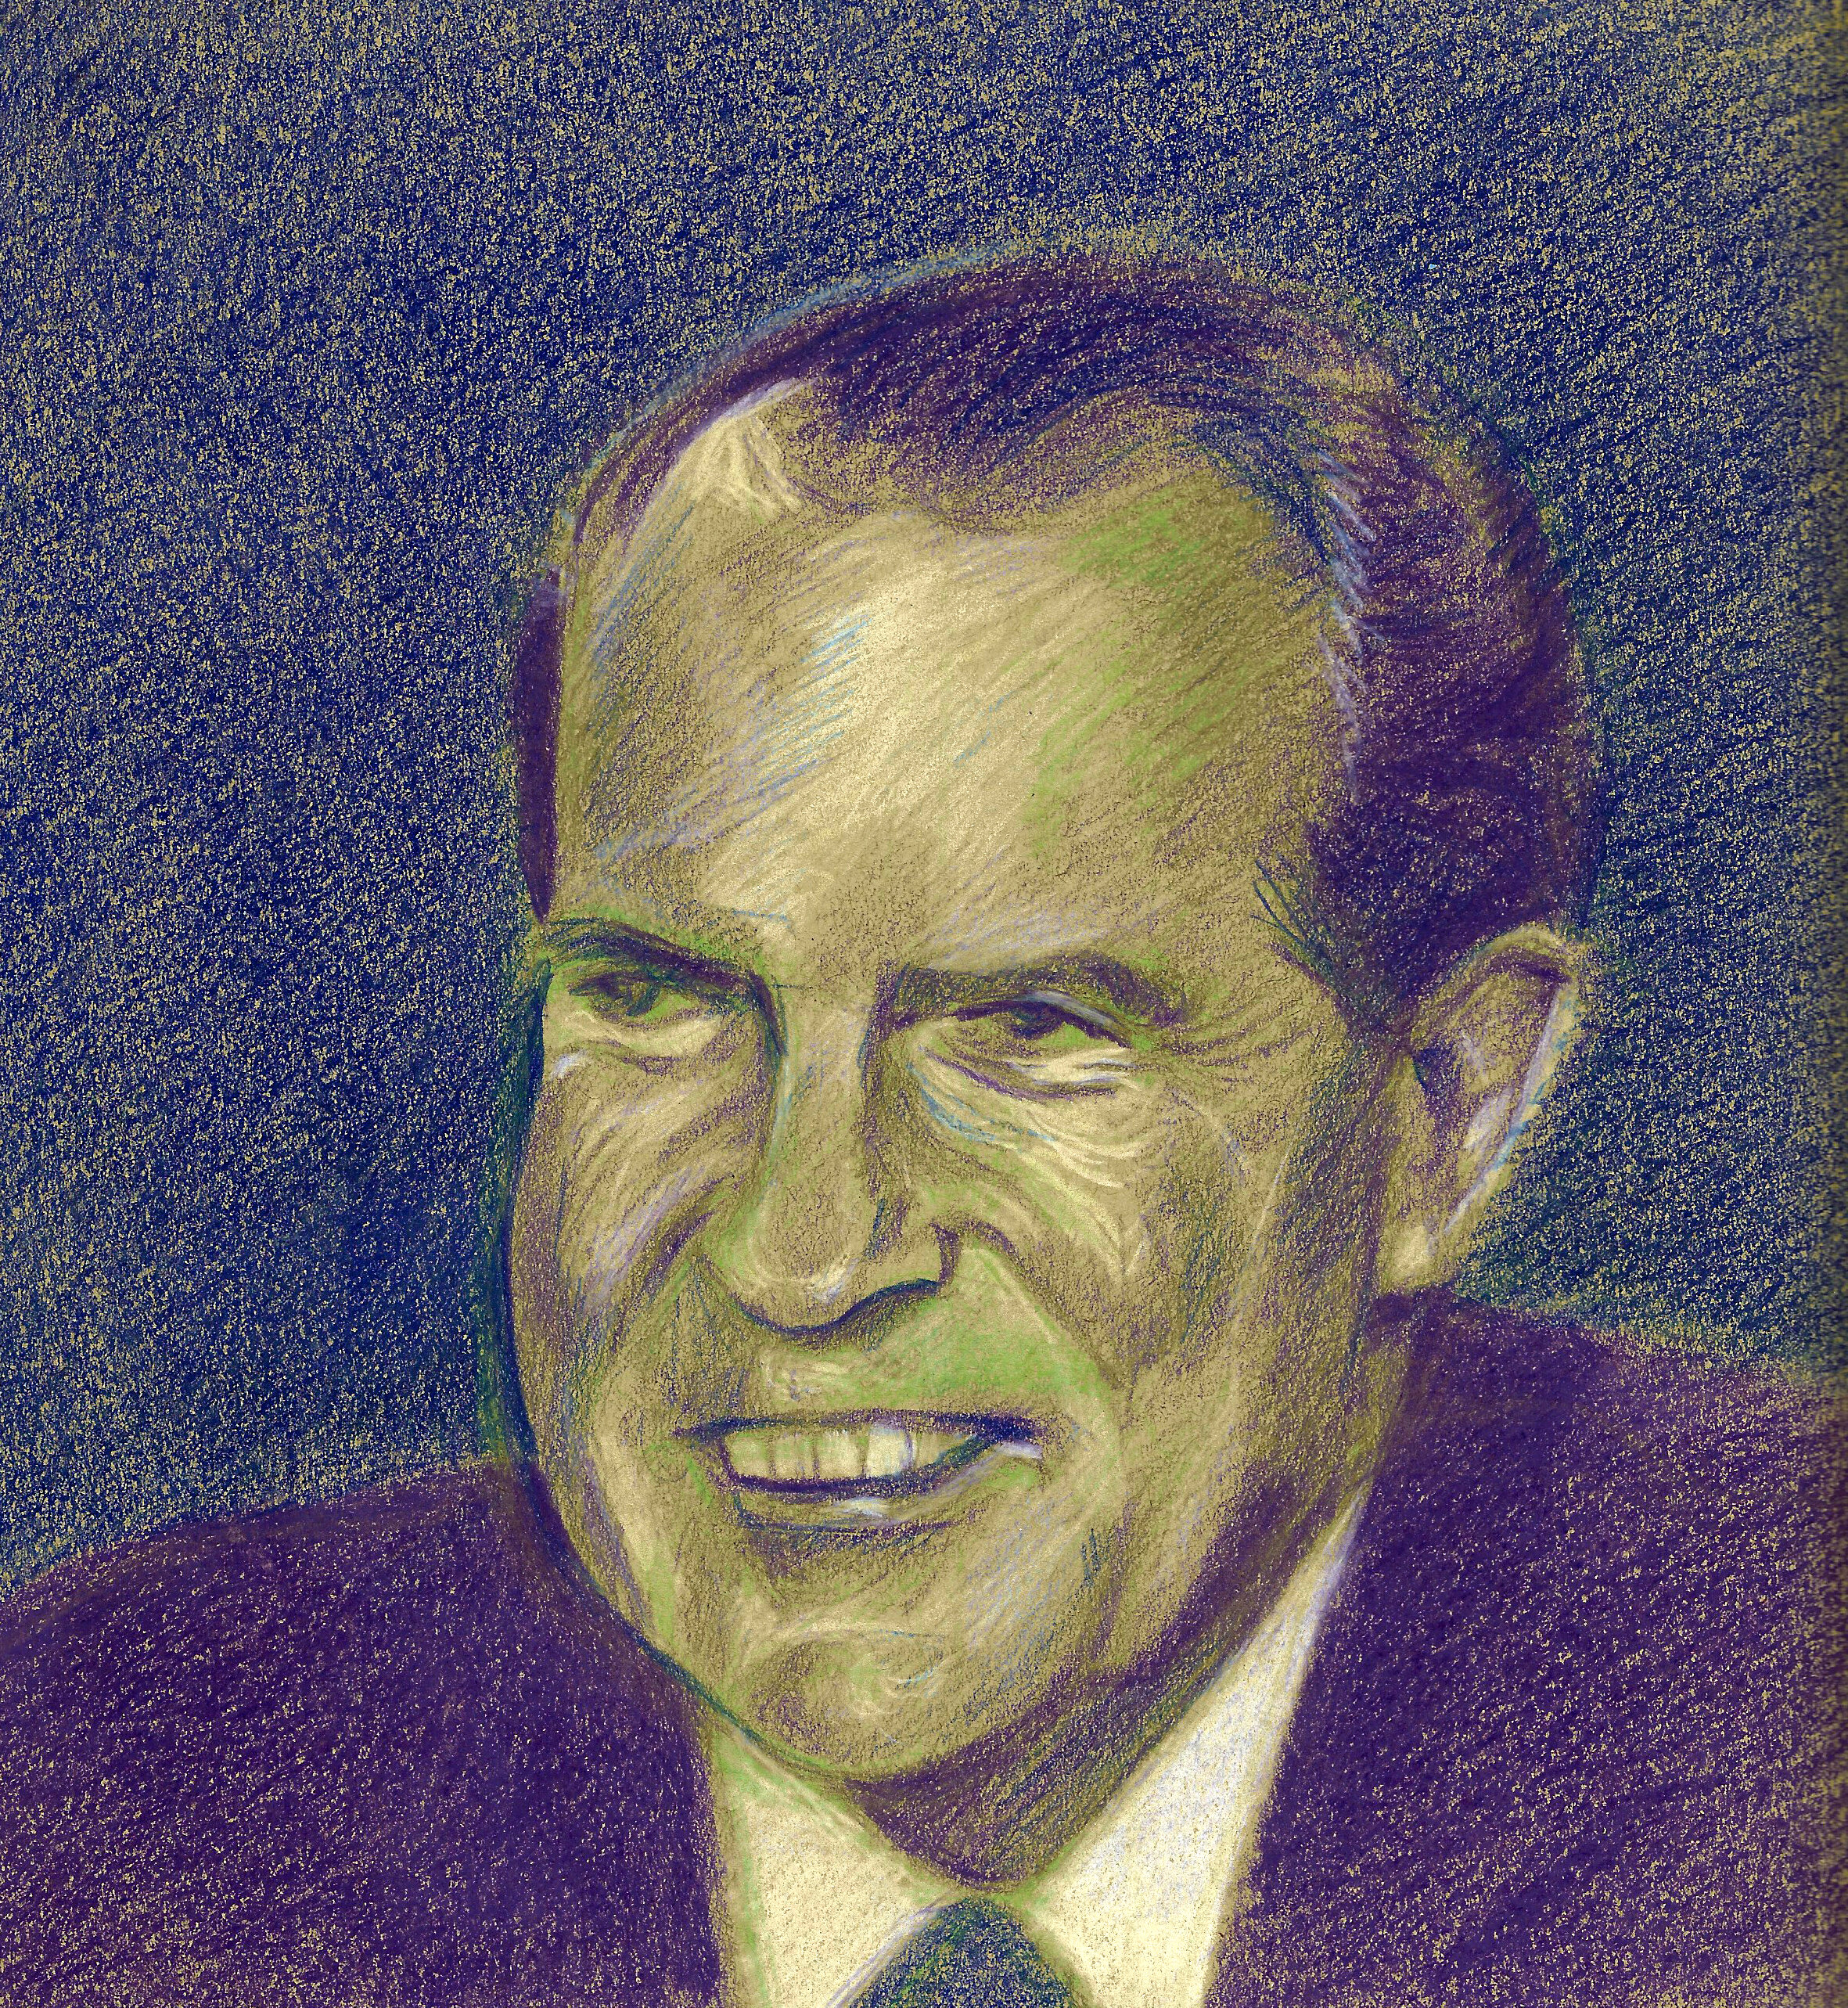 Richard Nixon - War Criminal